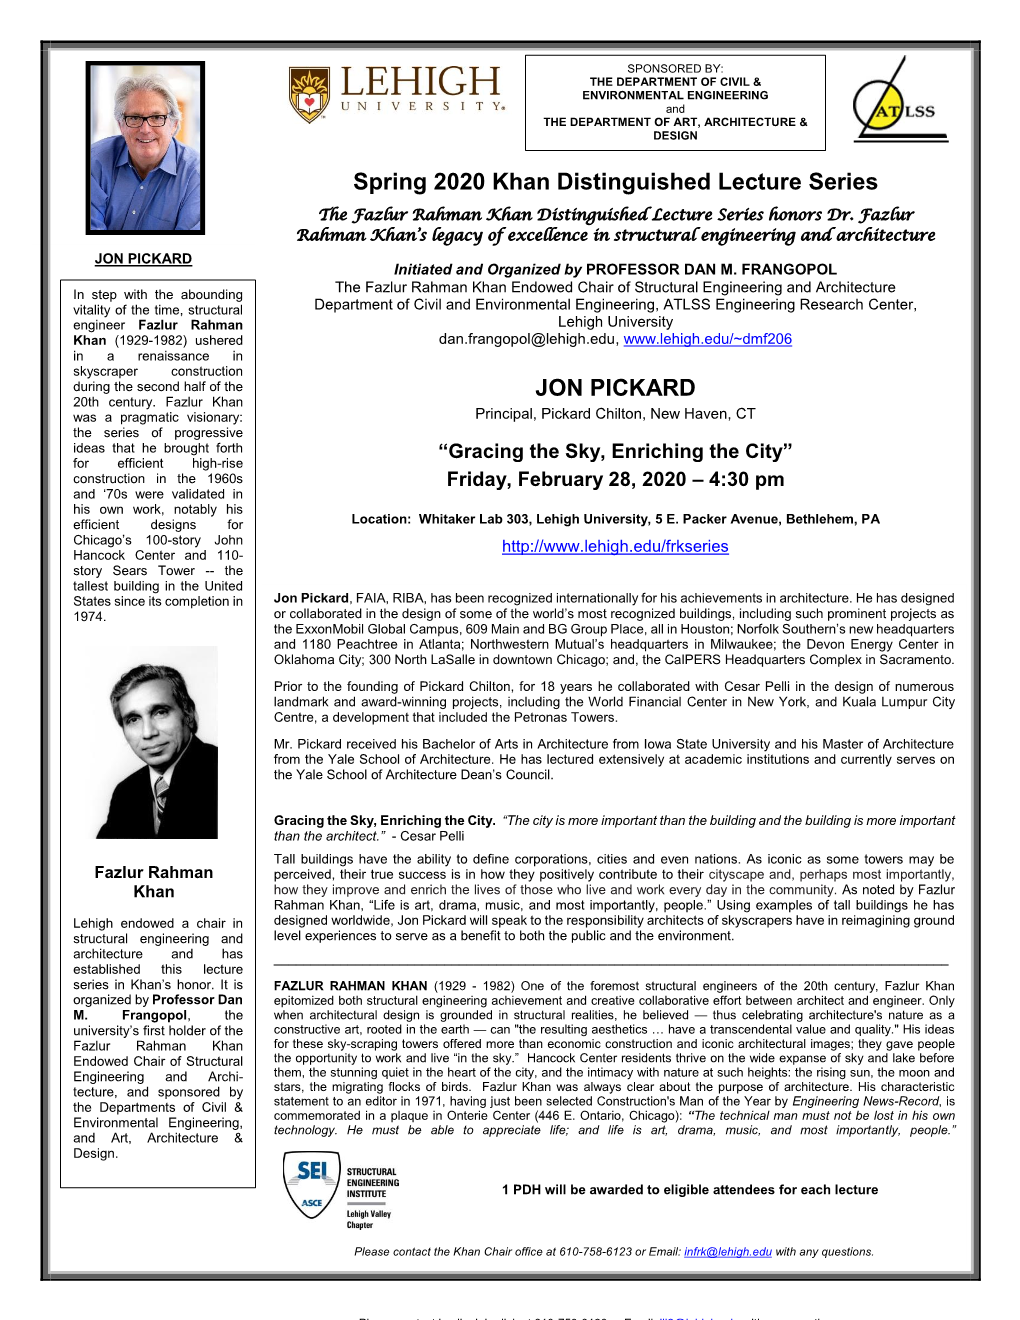 Spring 2020 Khan Distinguished Lecture Series JON PICKARD